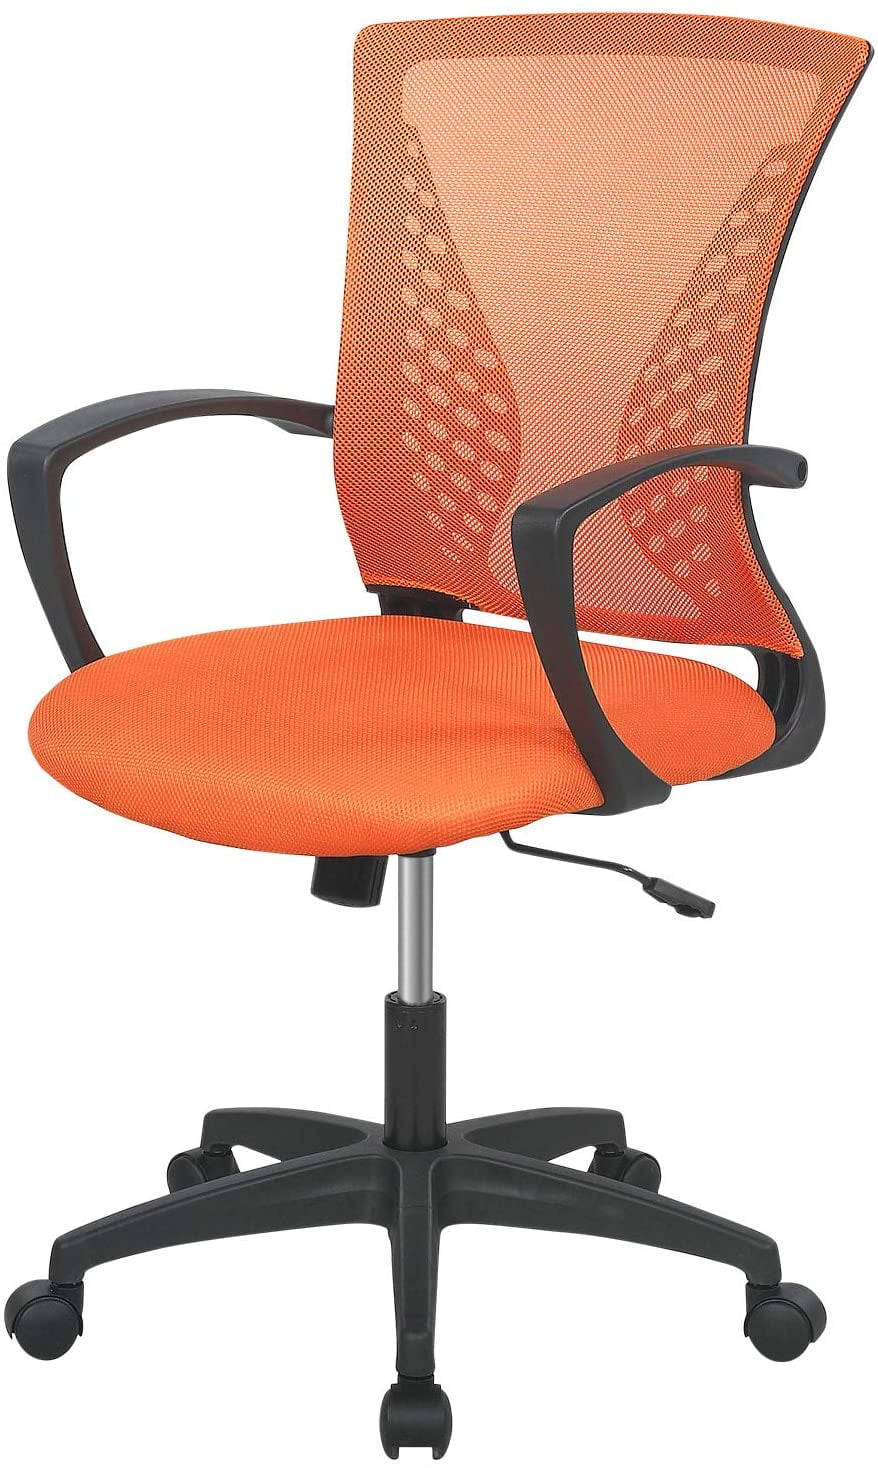 Mesh Office Chair Desk Chair Computer Chair with Lumbar